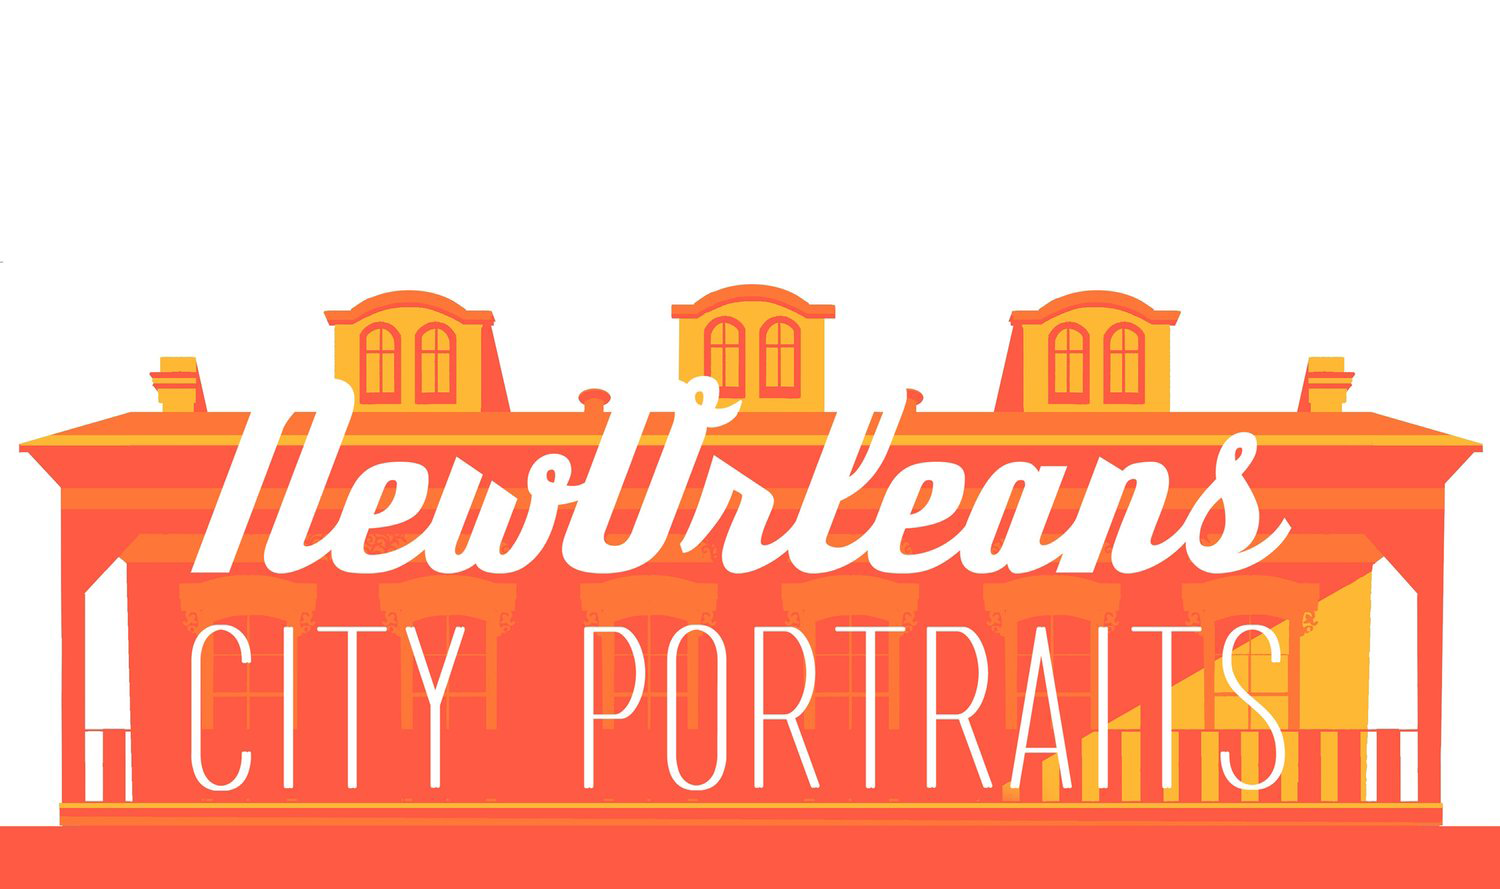 New Orleans City Portraits